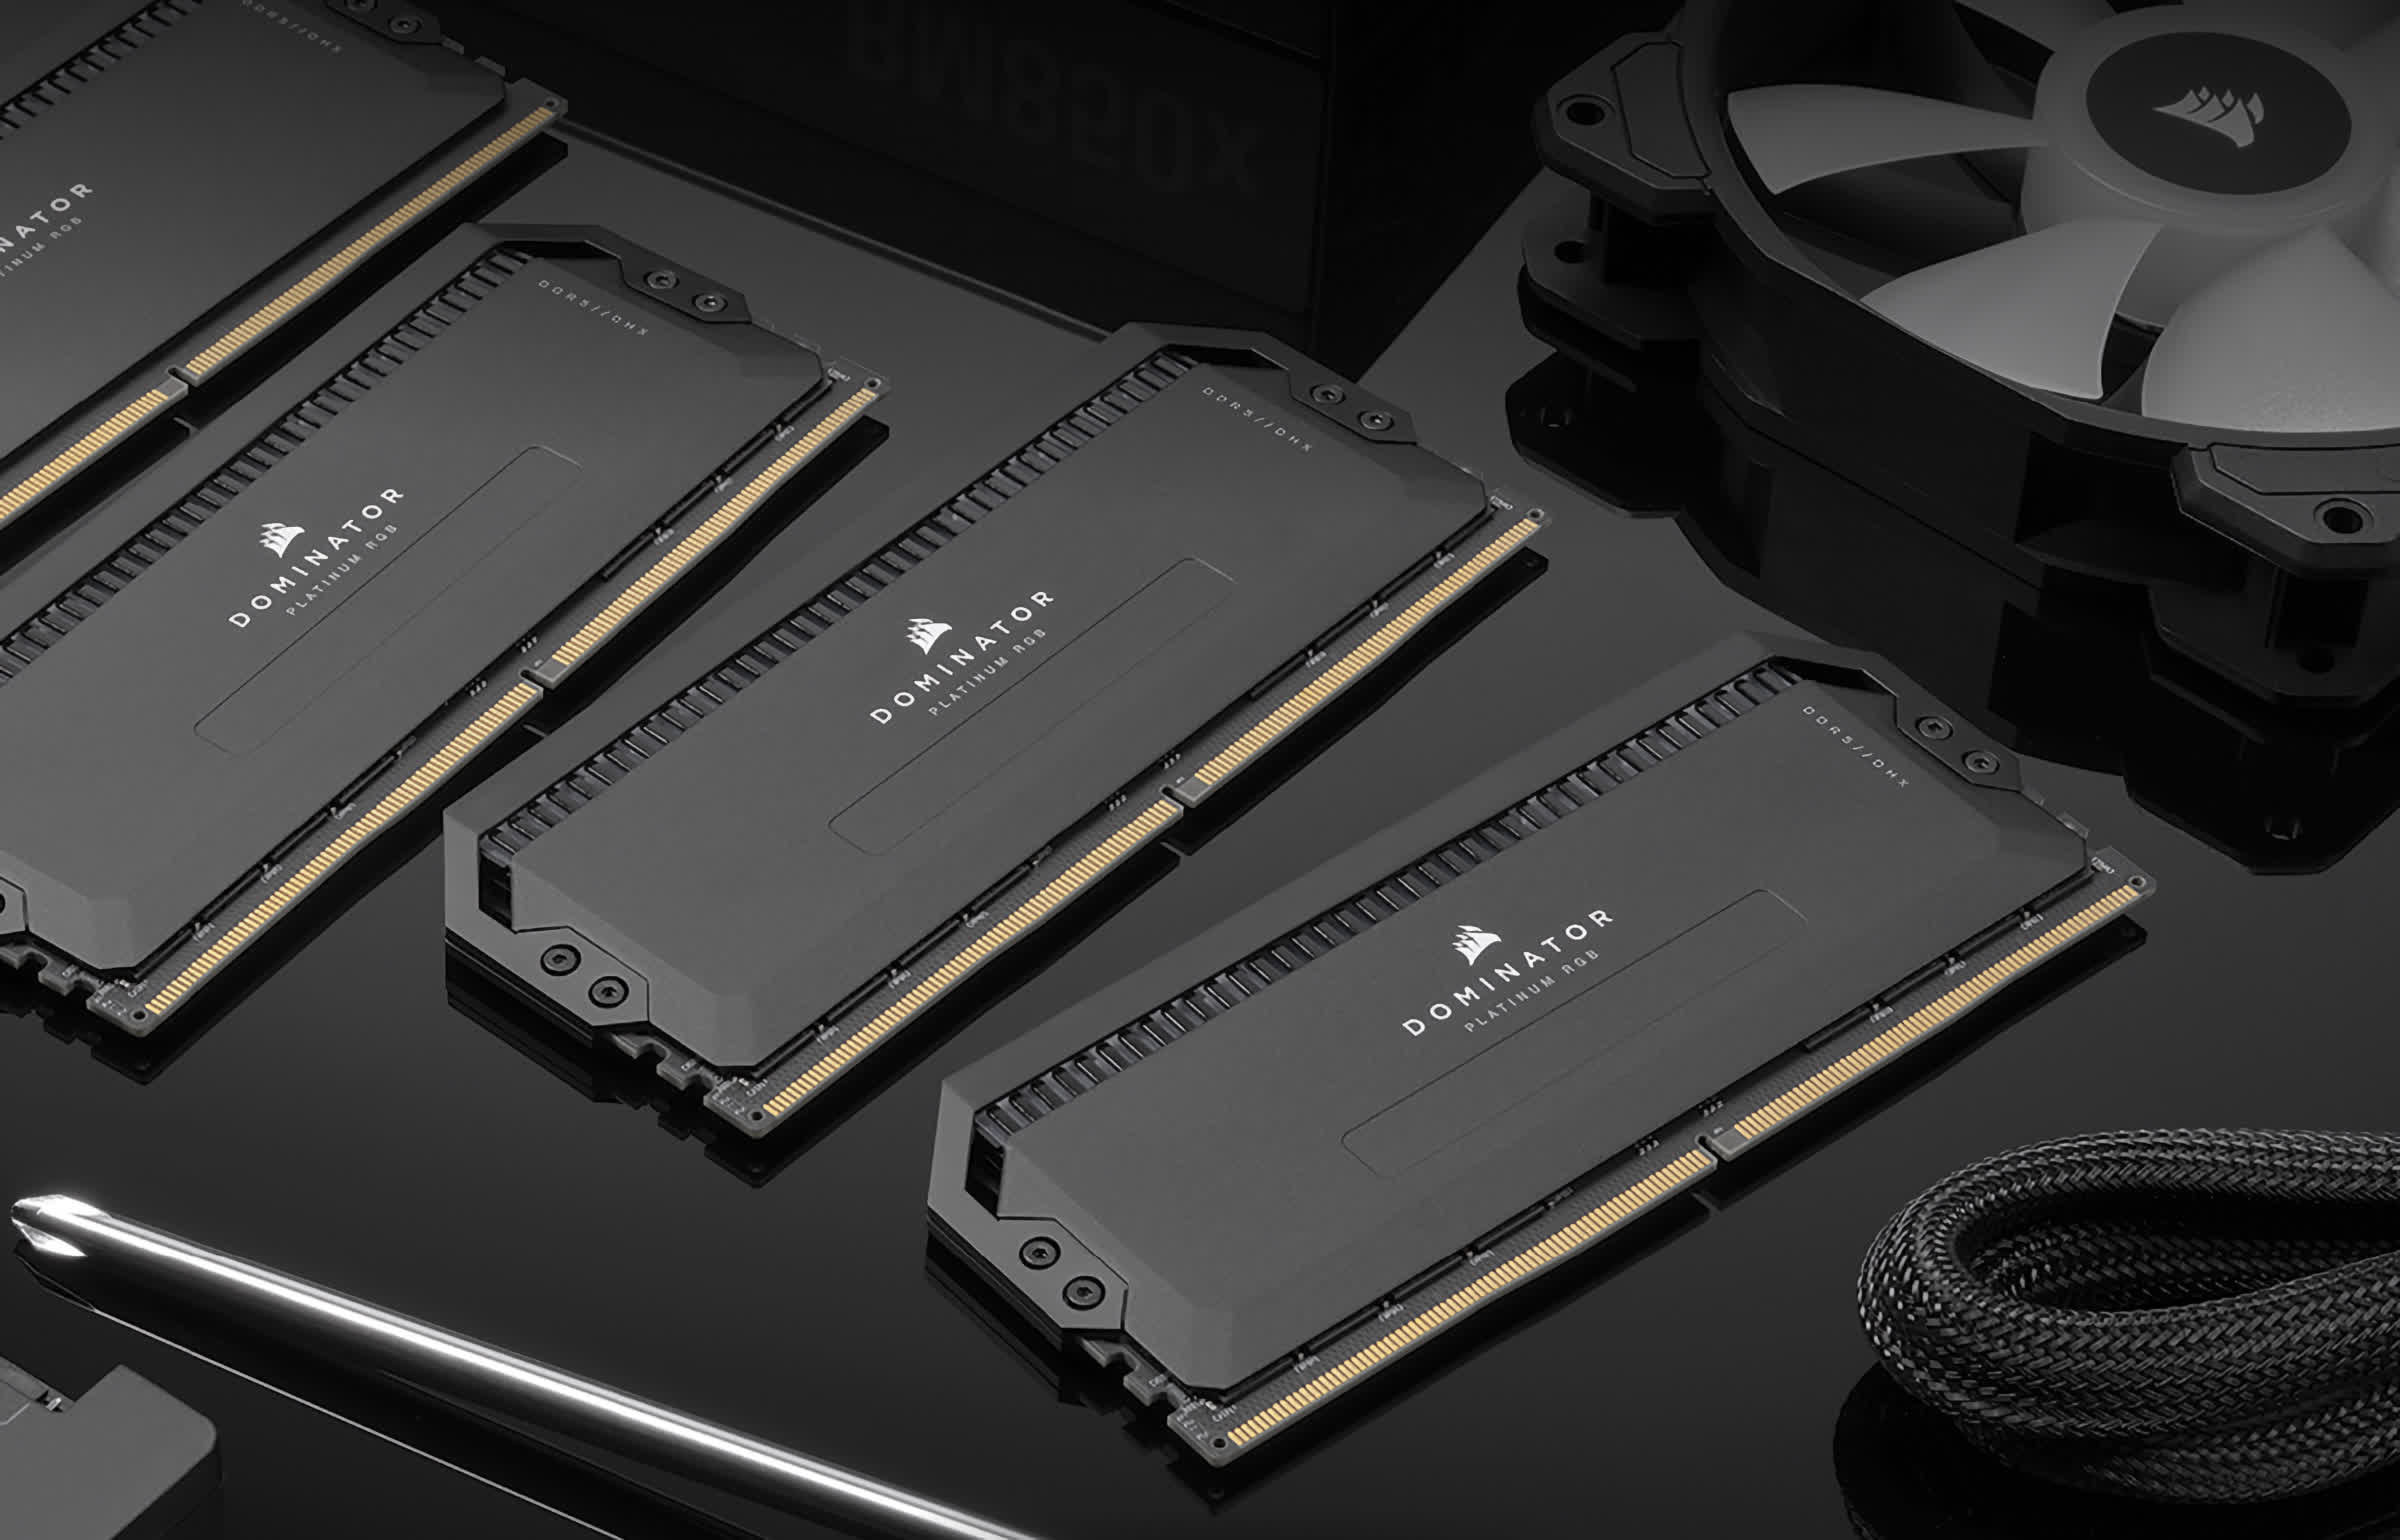 Corsair introduces Dominator DDR5 Platinum RGB memory clocked up to 6,400 MT/s